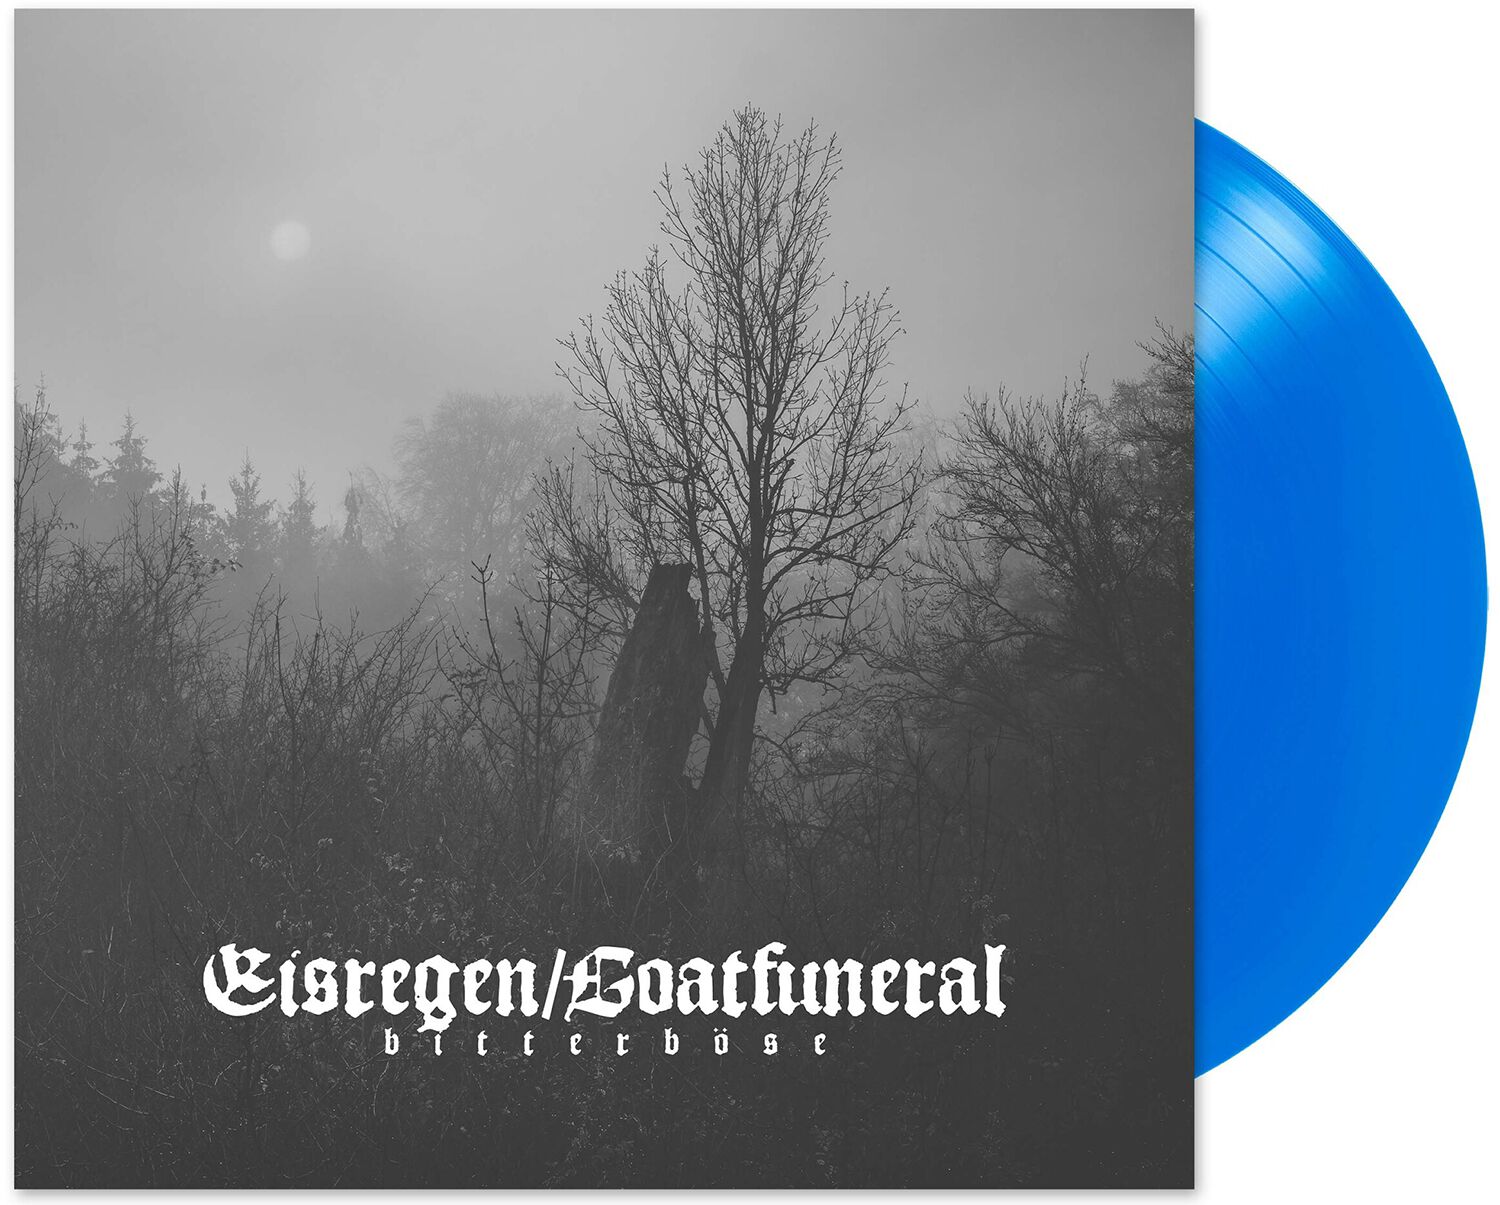 Eisregen / Goatfuneral bitterböse LP blau